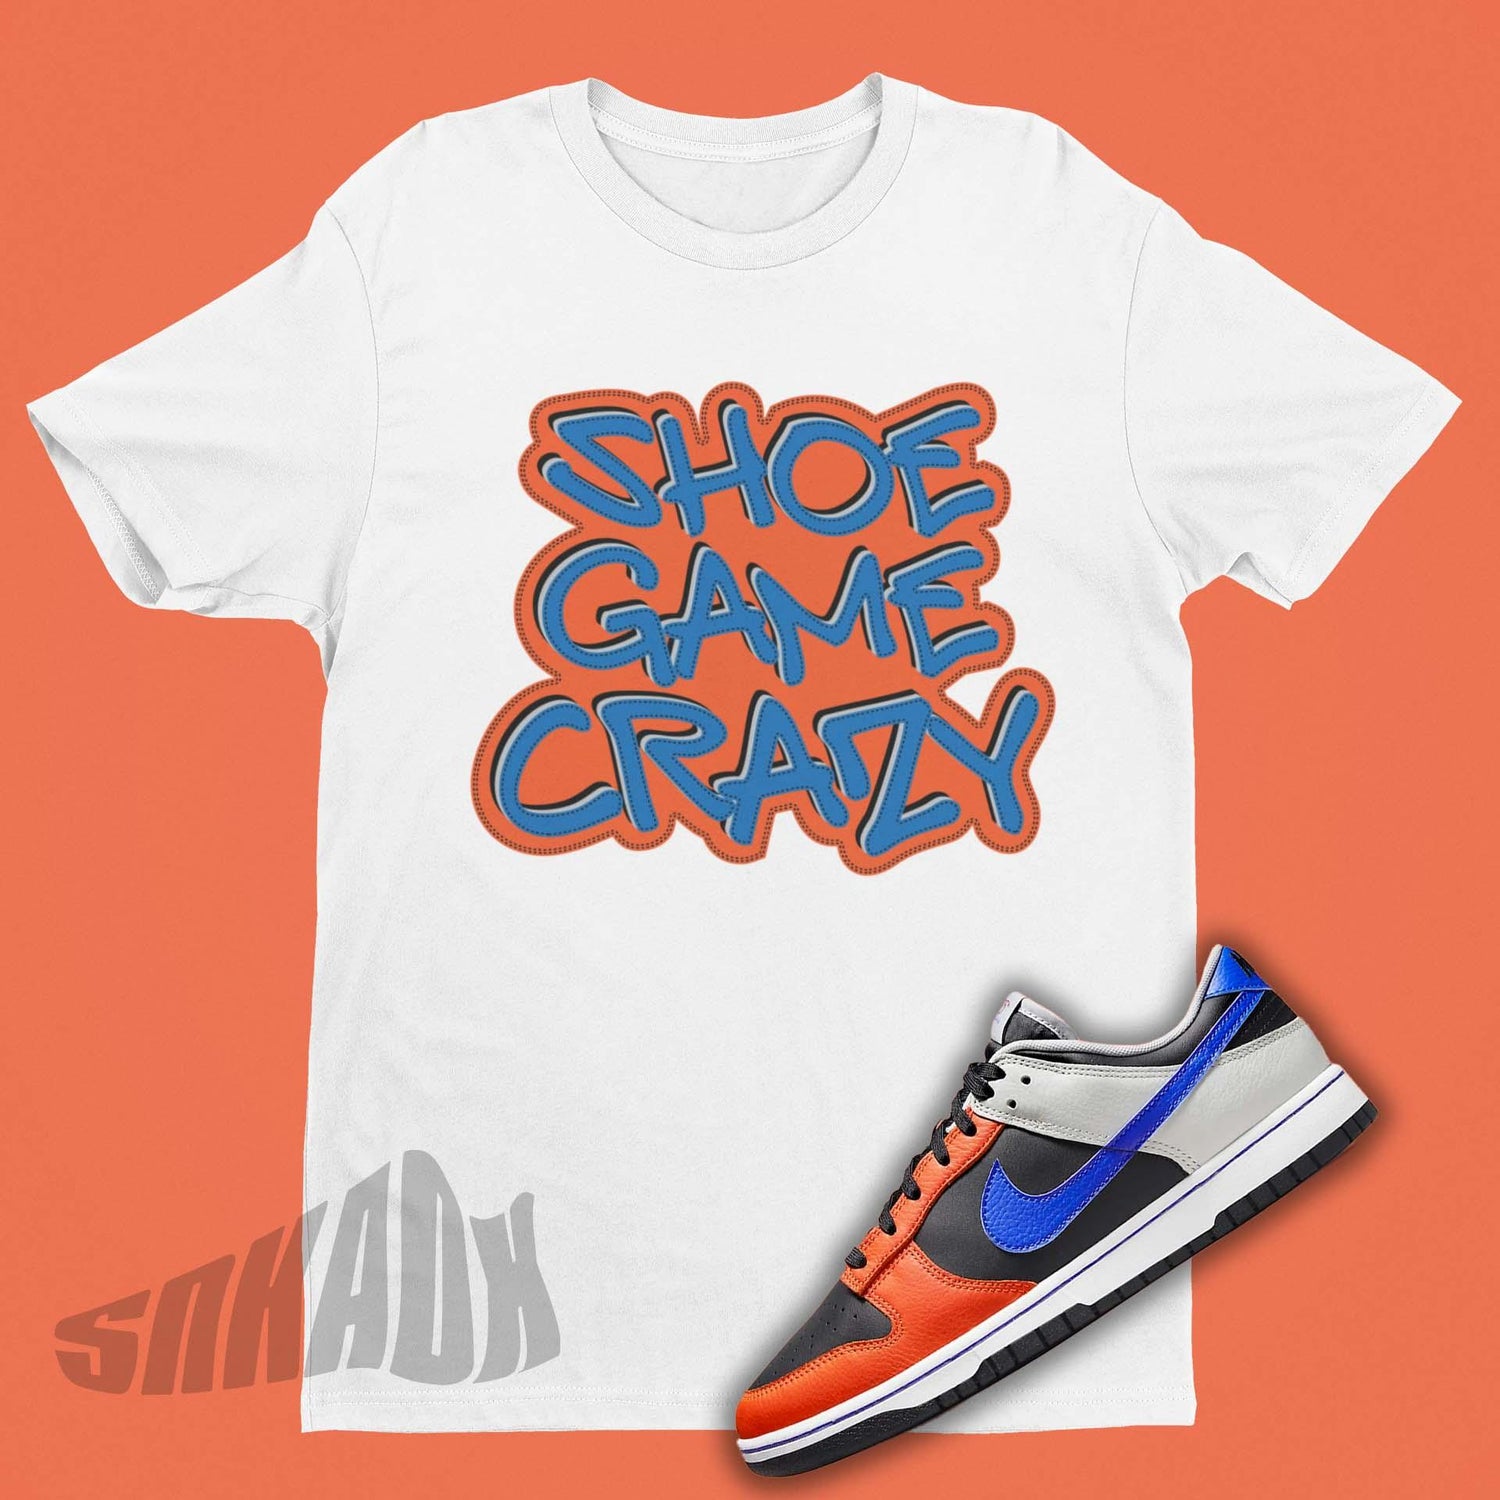 Nike Dunk New York Knicks Matching Shirt | Shoe Game Crazy Shirt | SNKADX